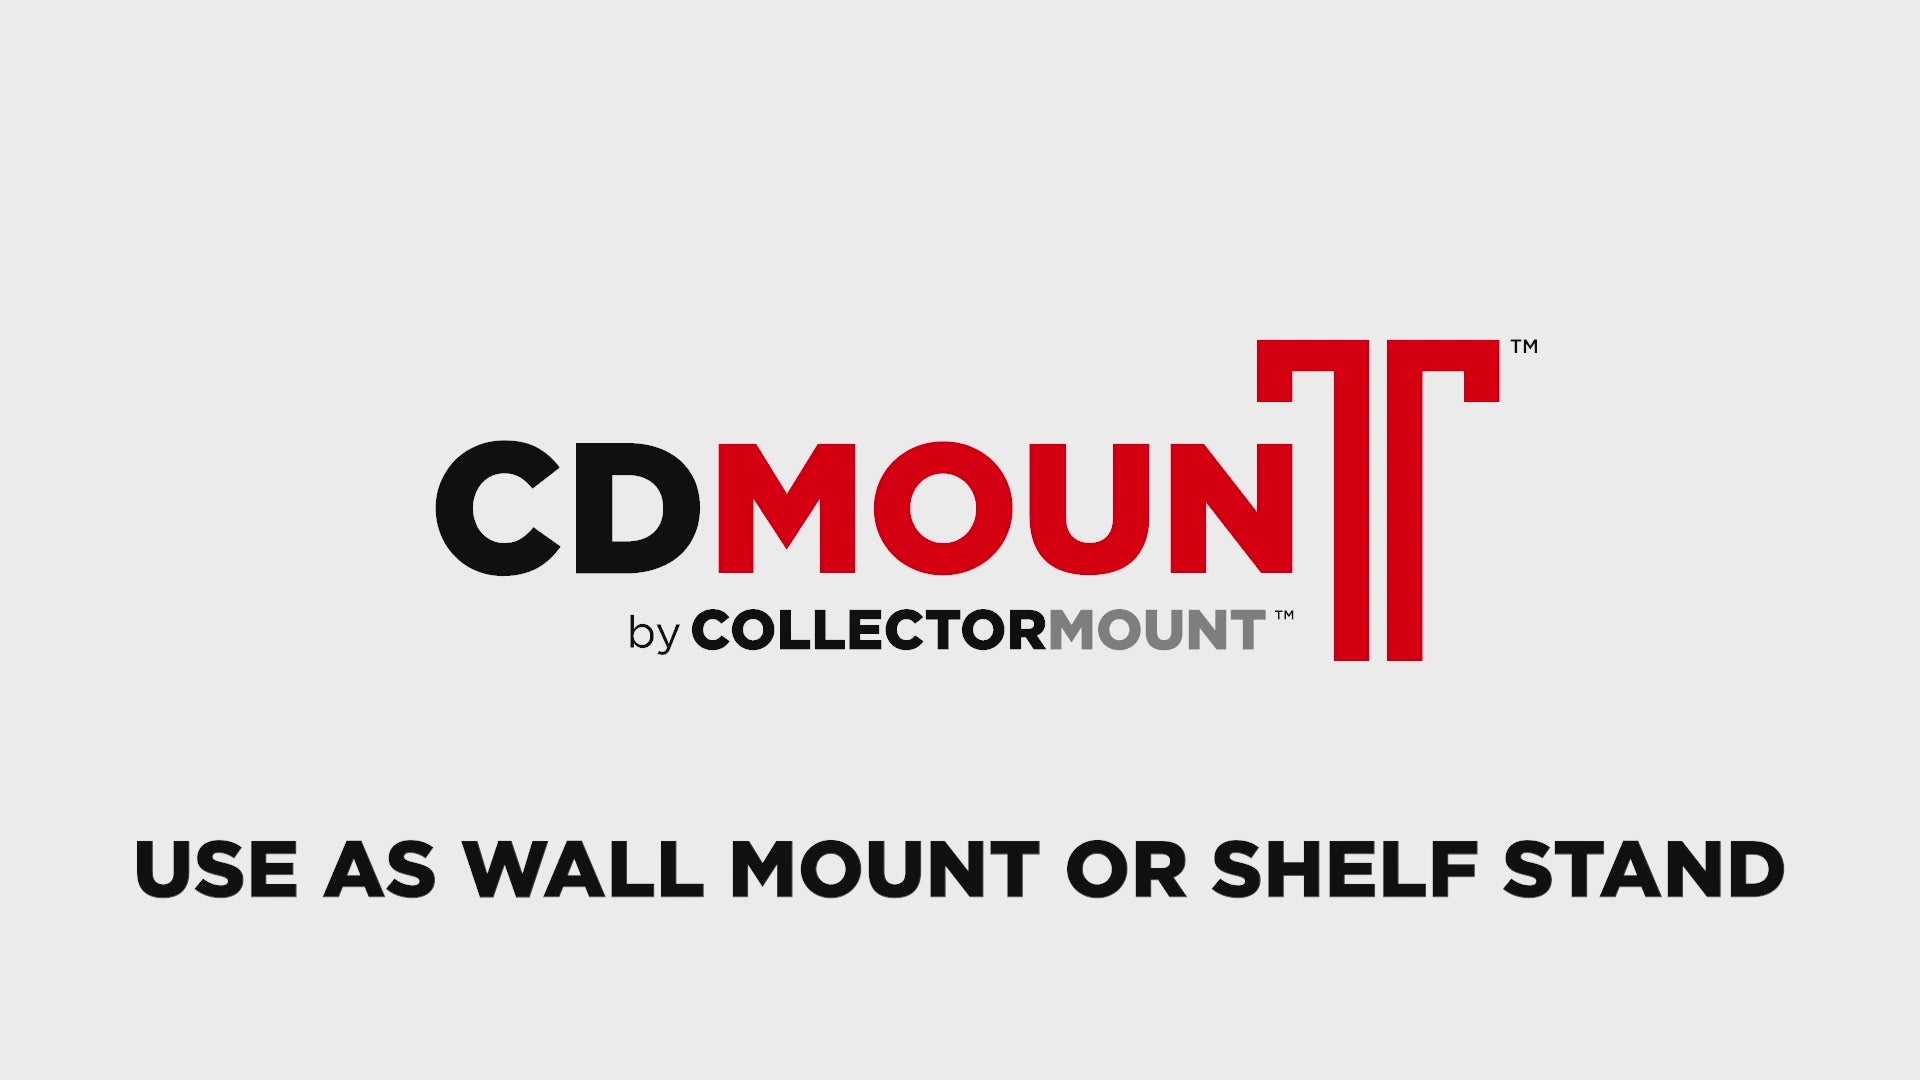 CDMount CD